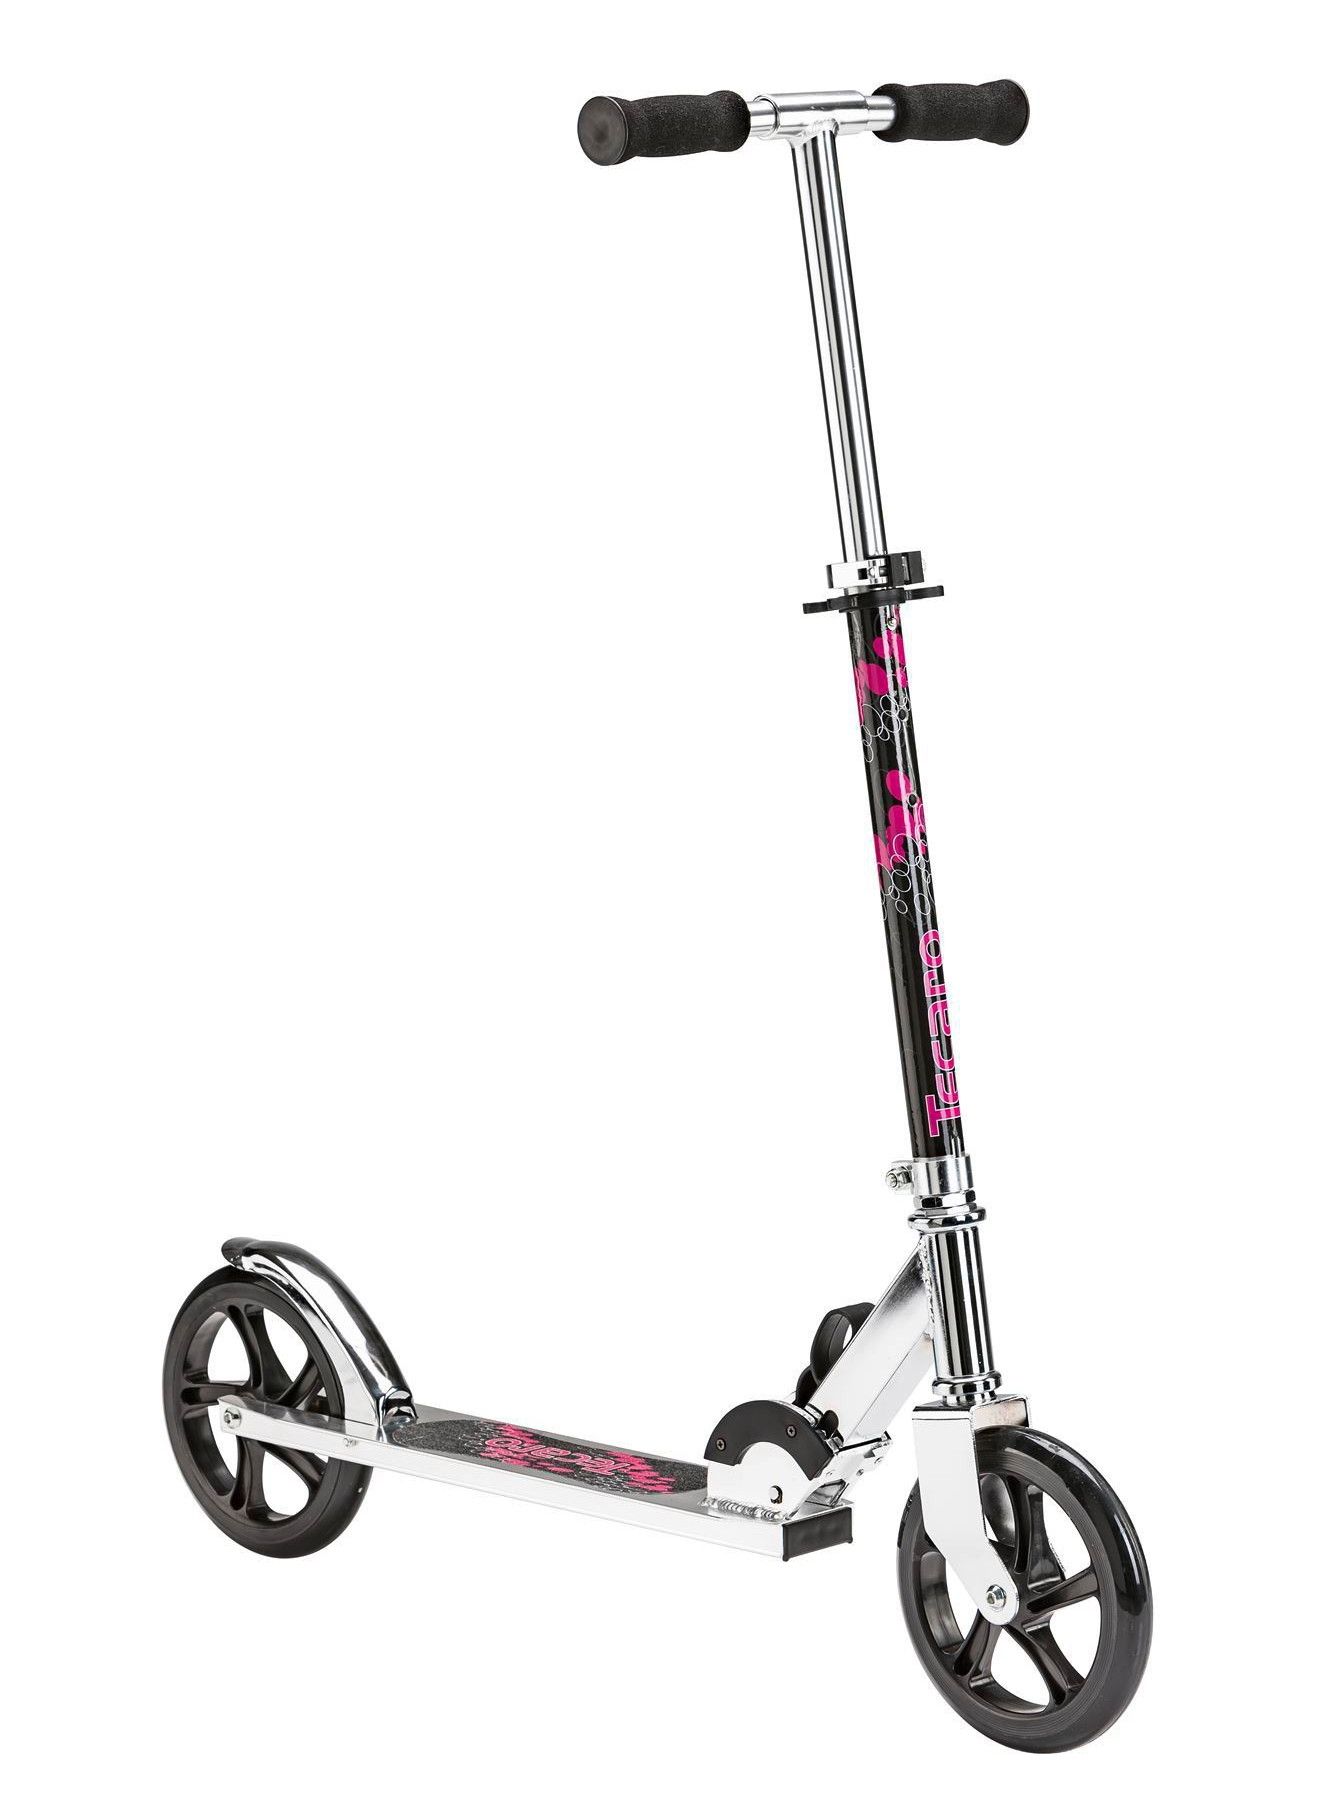 Tecaro Scooter Speed 205 silber/pink - Fahrrad Online Shop